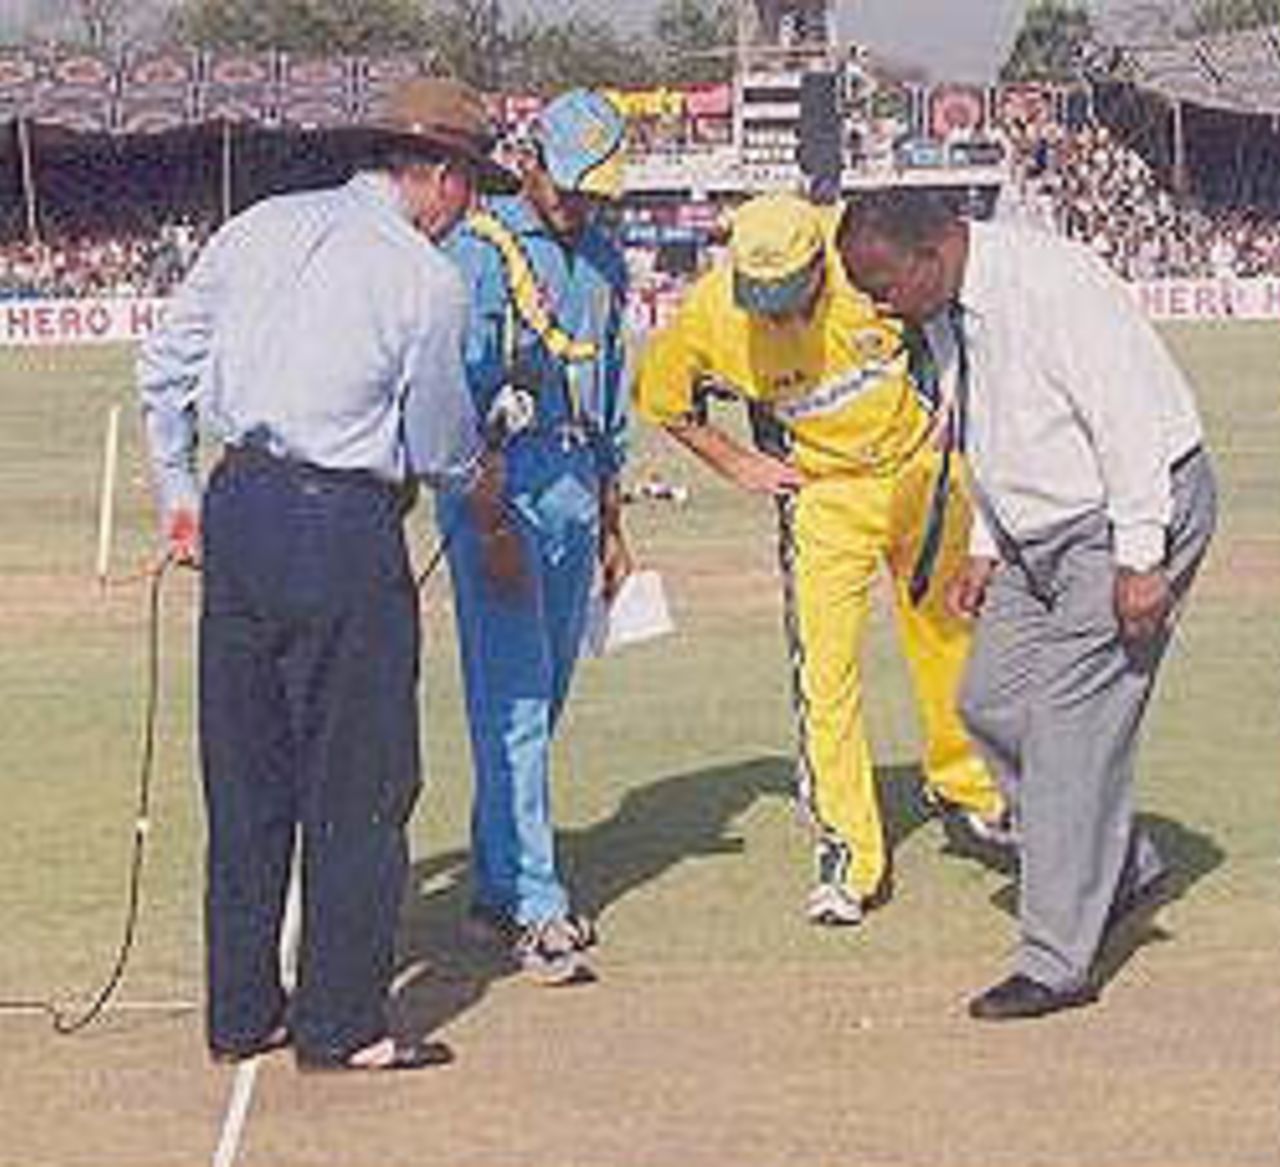 31 March 2001: Australia in India, 2000/01, 3rd One-Day International, India v Australia, Nehru Stadium, Indore.